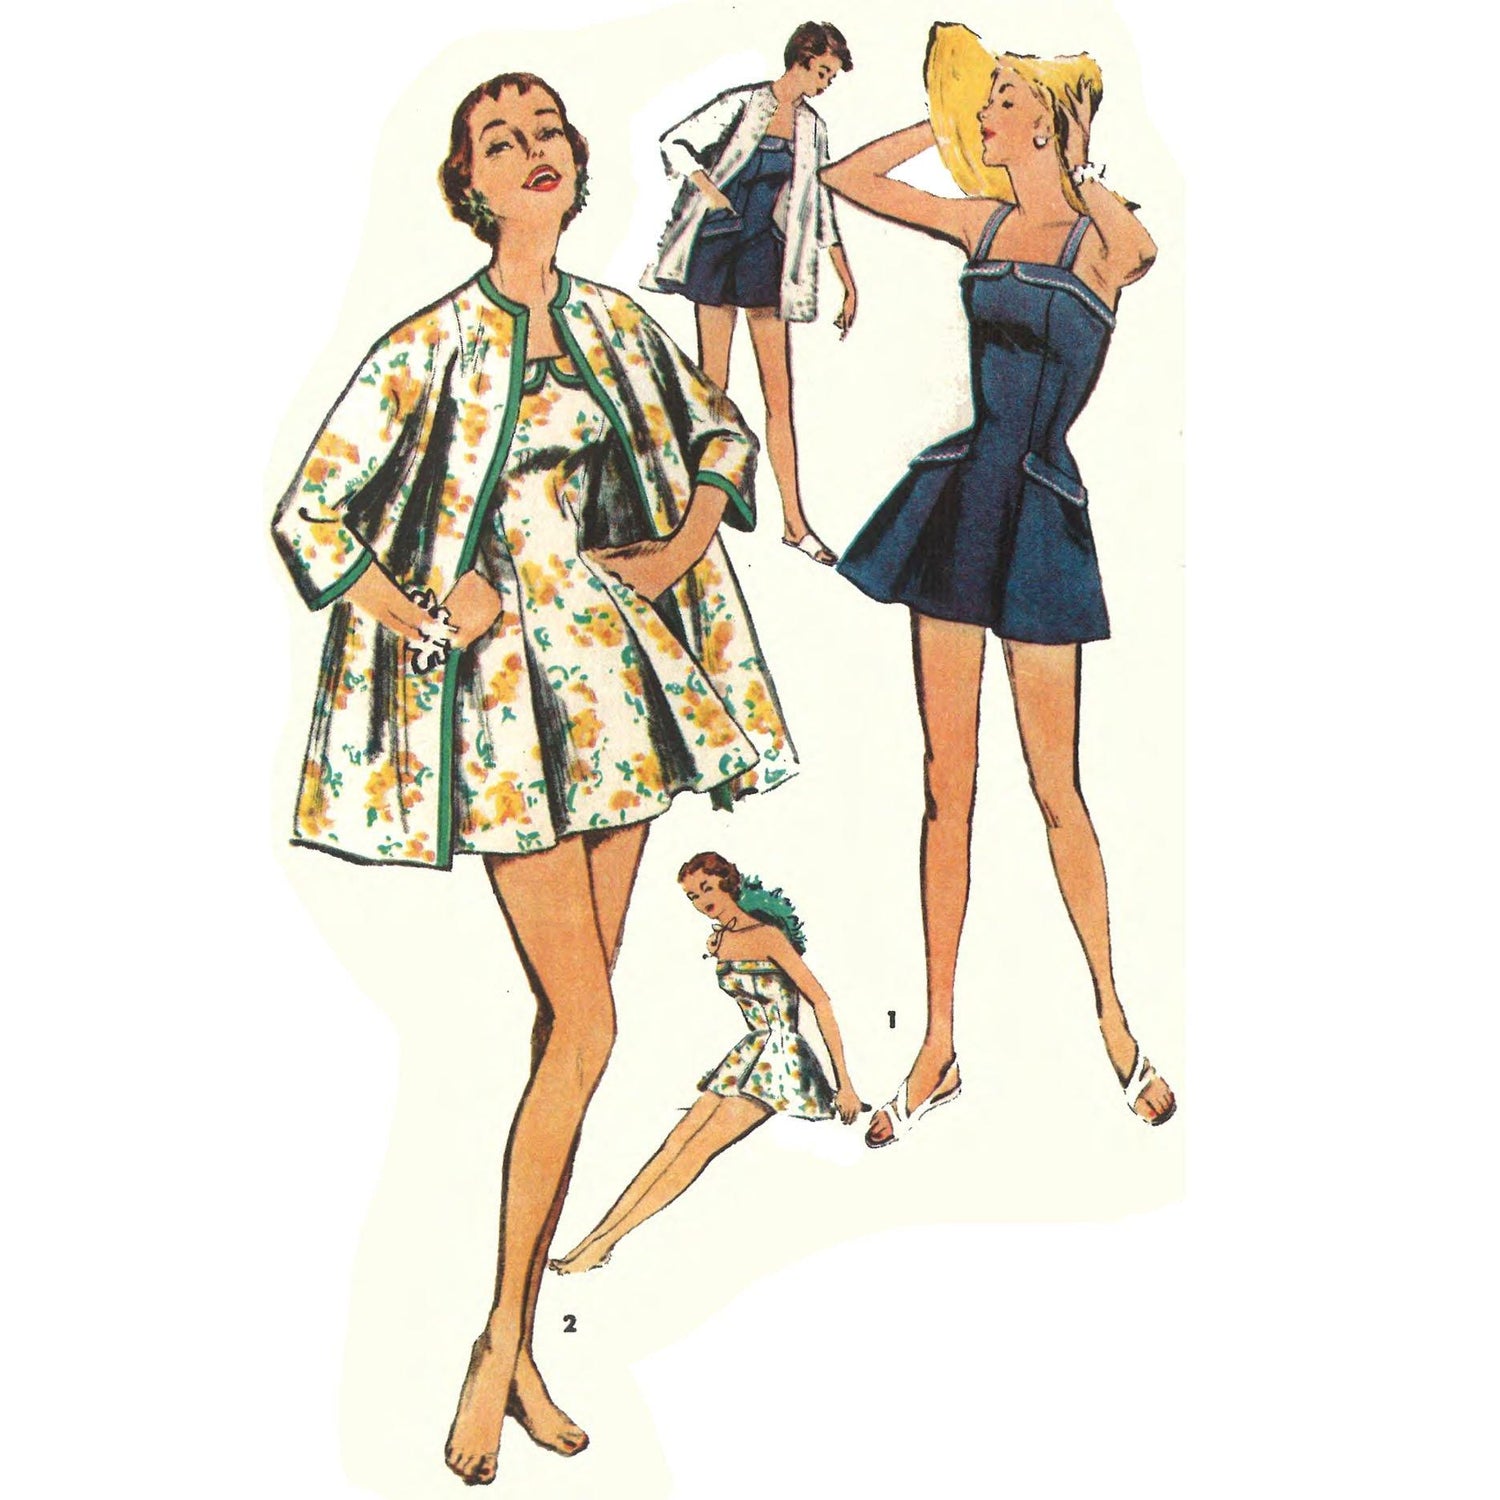 Women wearing bathing suit and beach coat